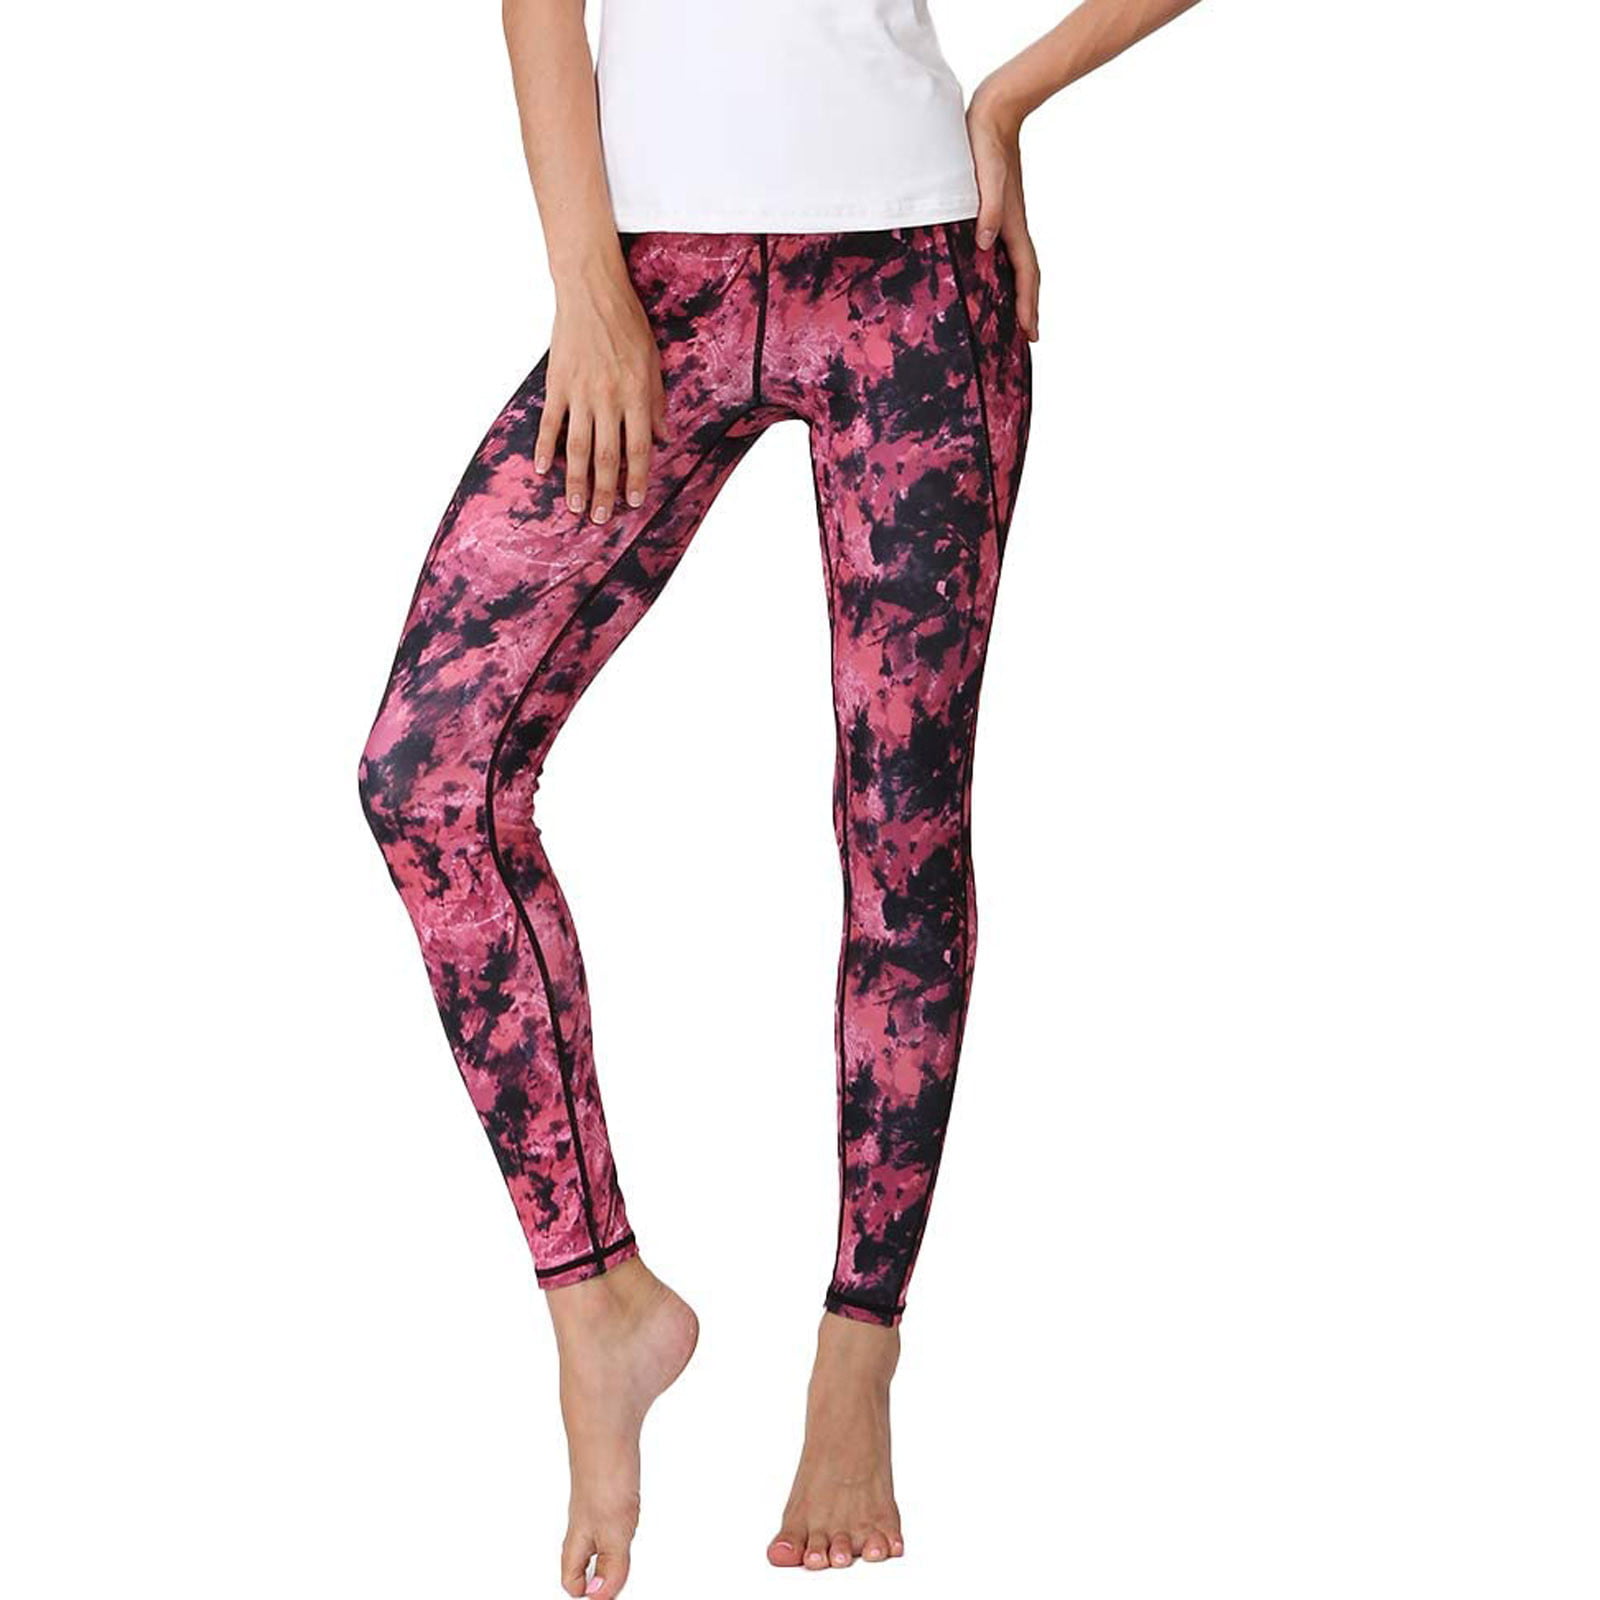 Victoria's Secret PINK Tie Dye Yoga Legging Sport Athletic Yoga Pant Great Gift 